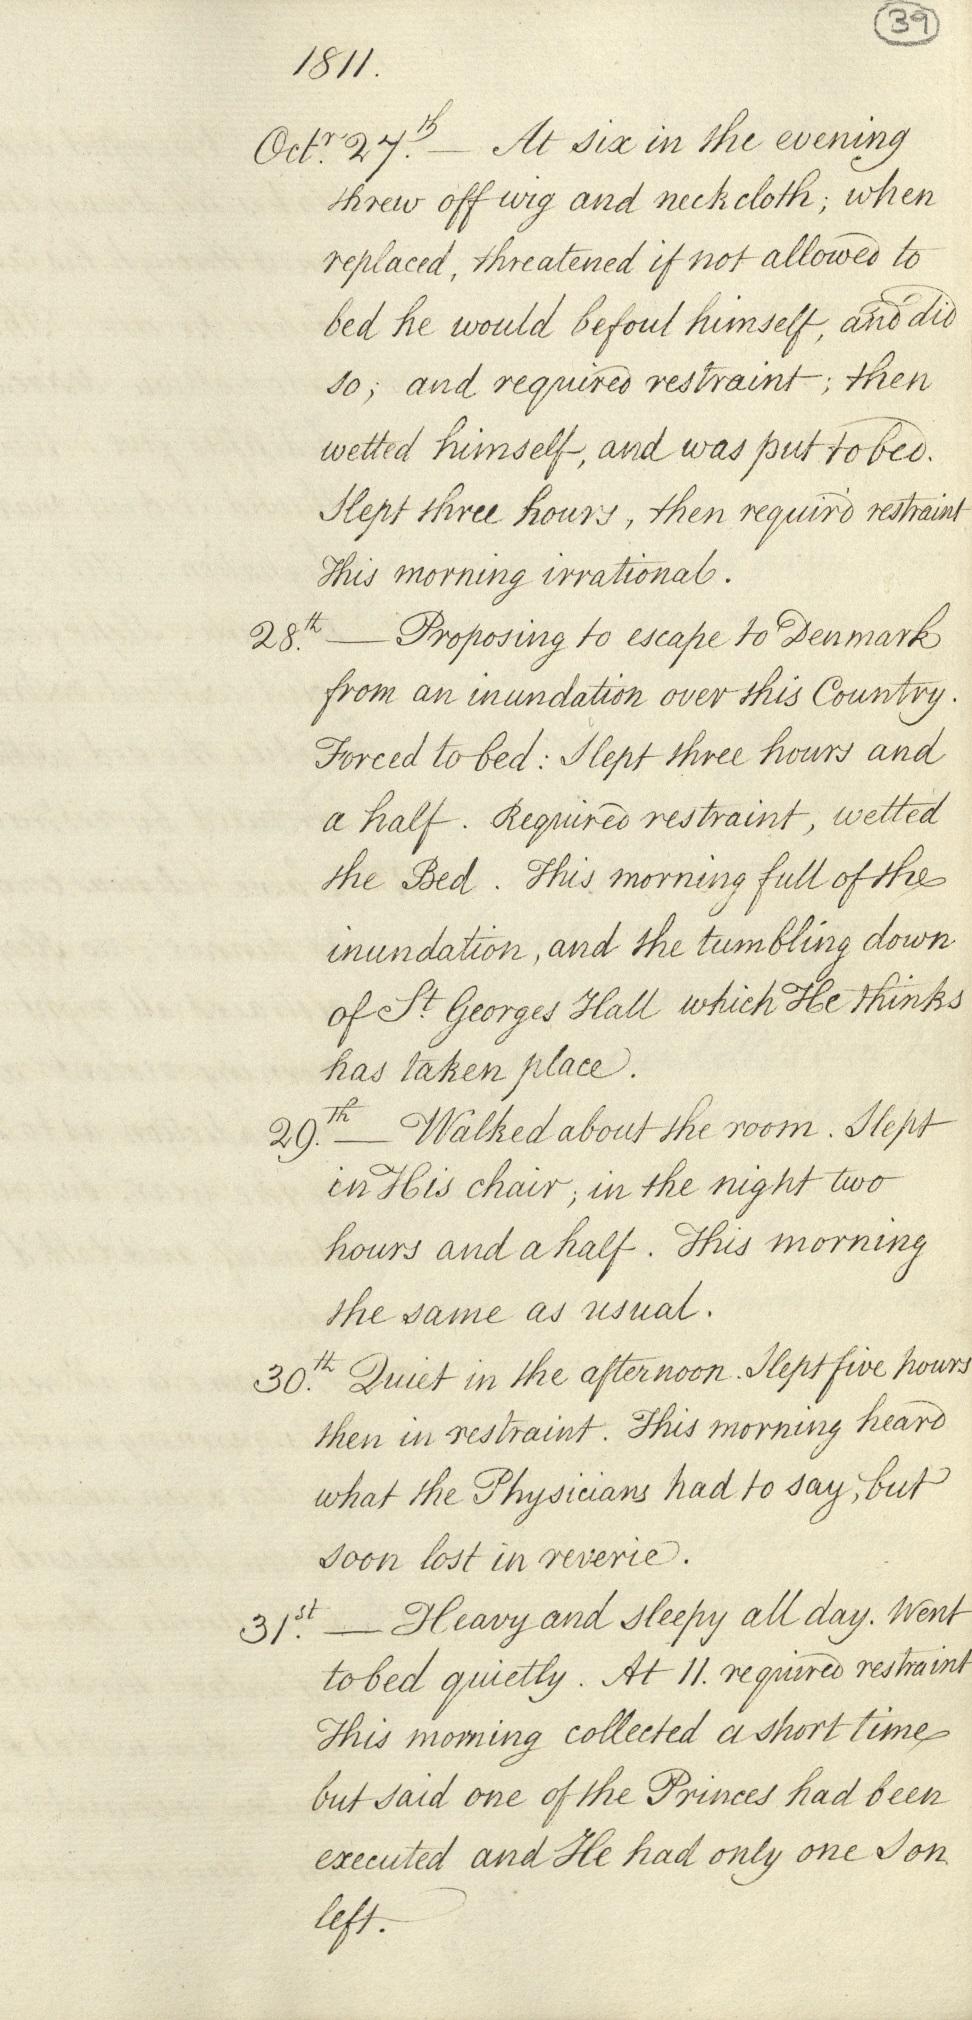 Account of George III's symptoms